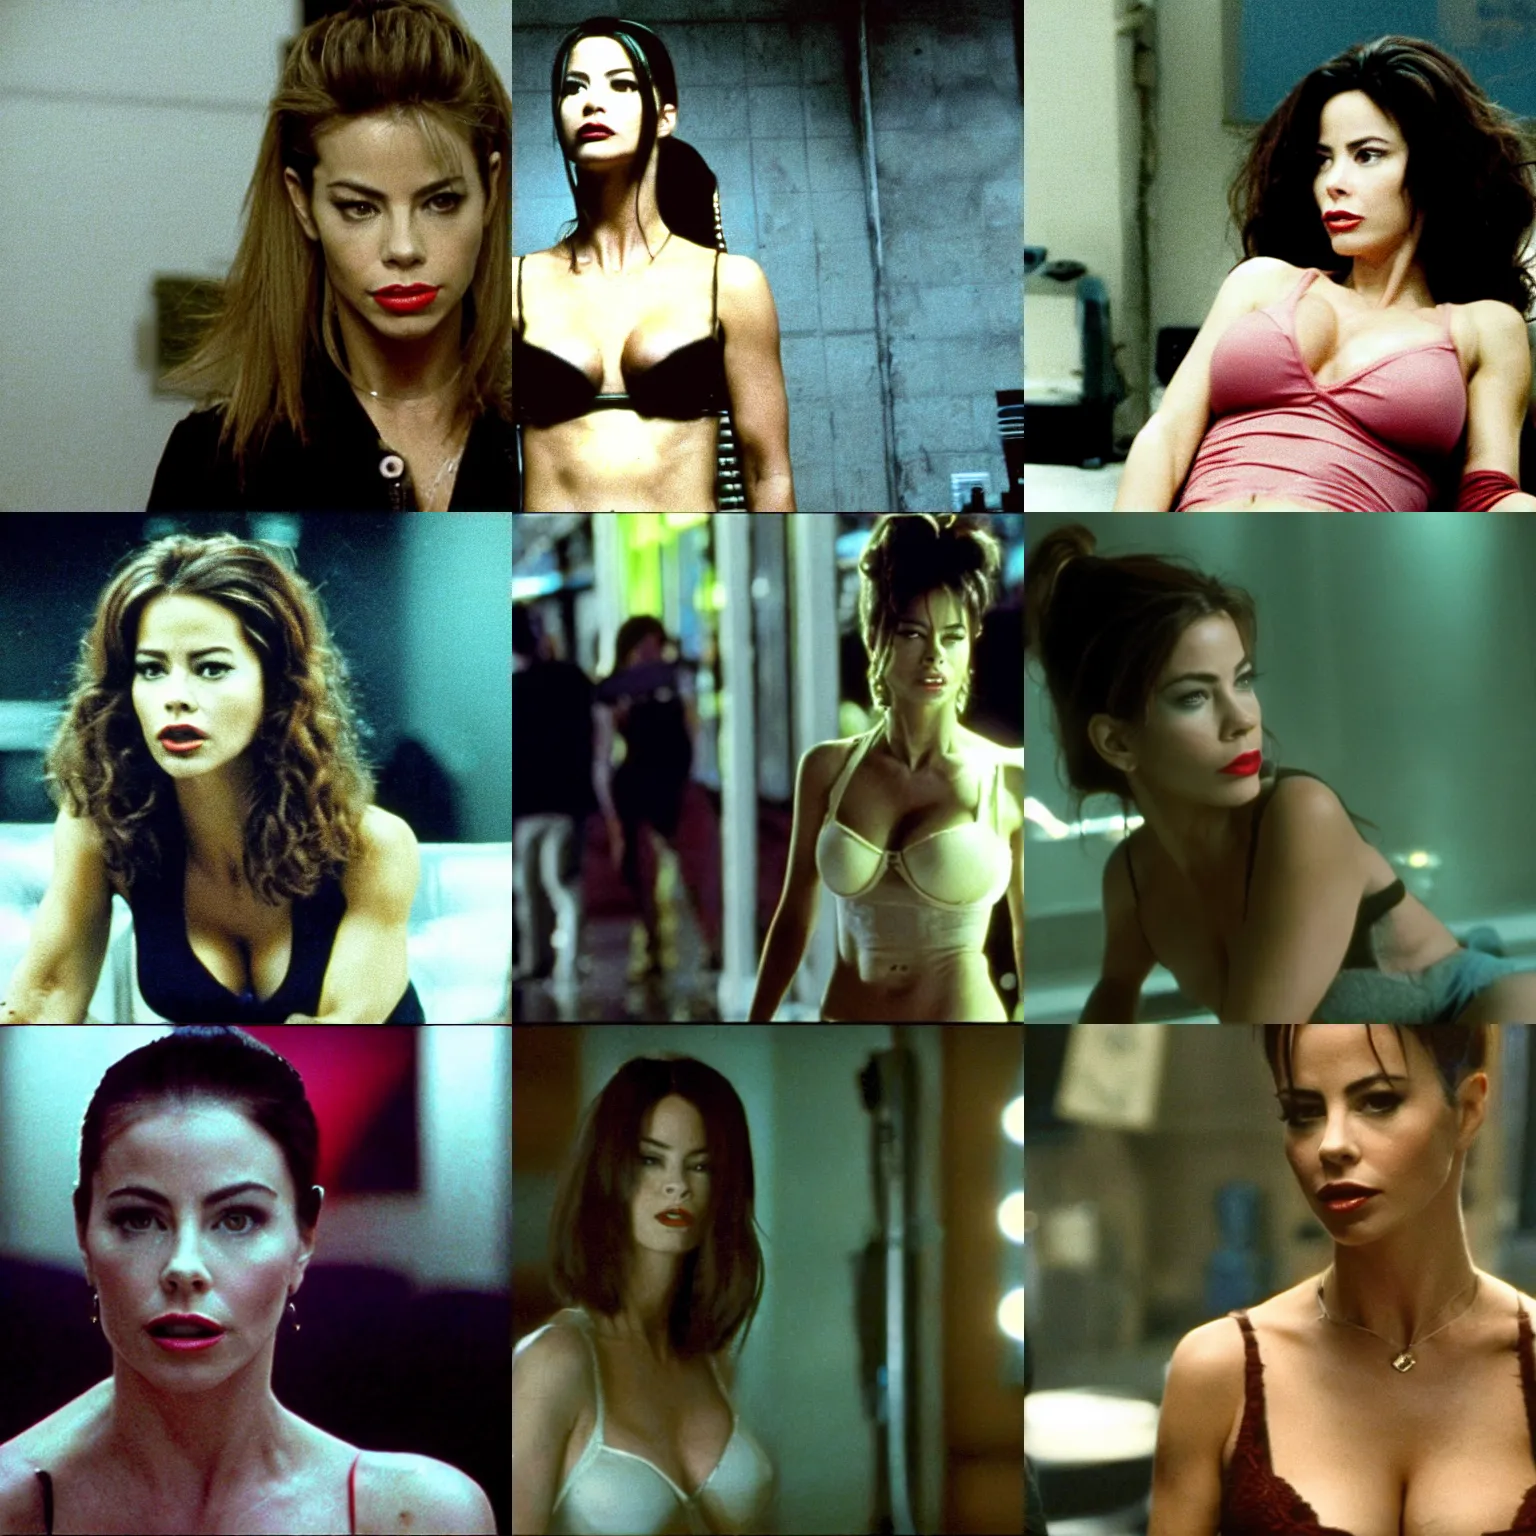 Prompt: cinematic still of Sofia Vergara in Fight Club (1999), blueray